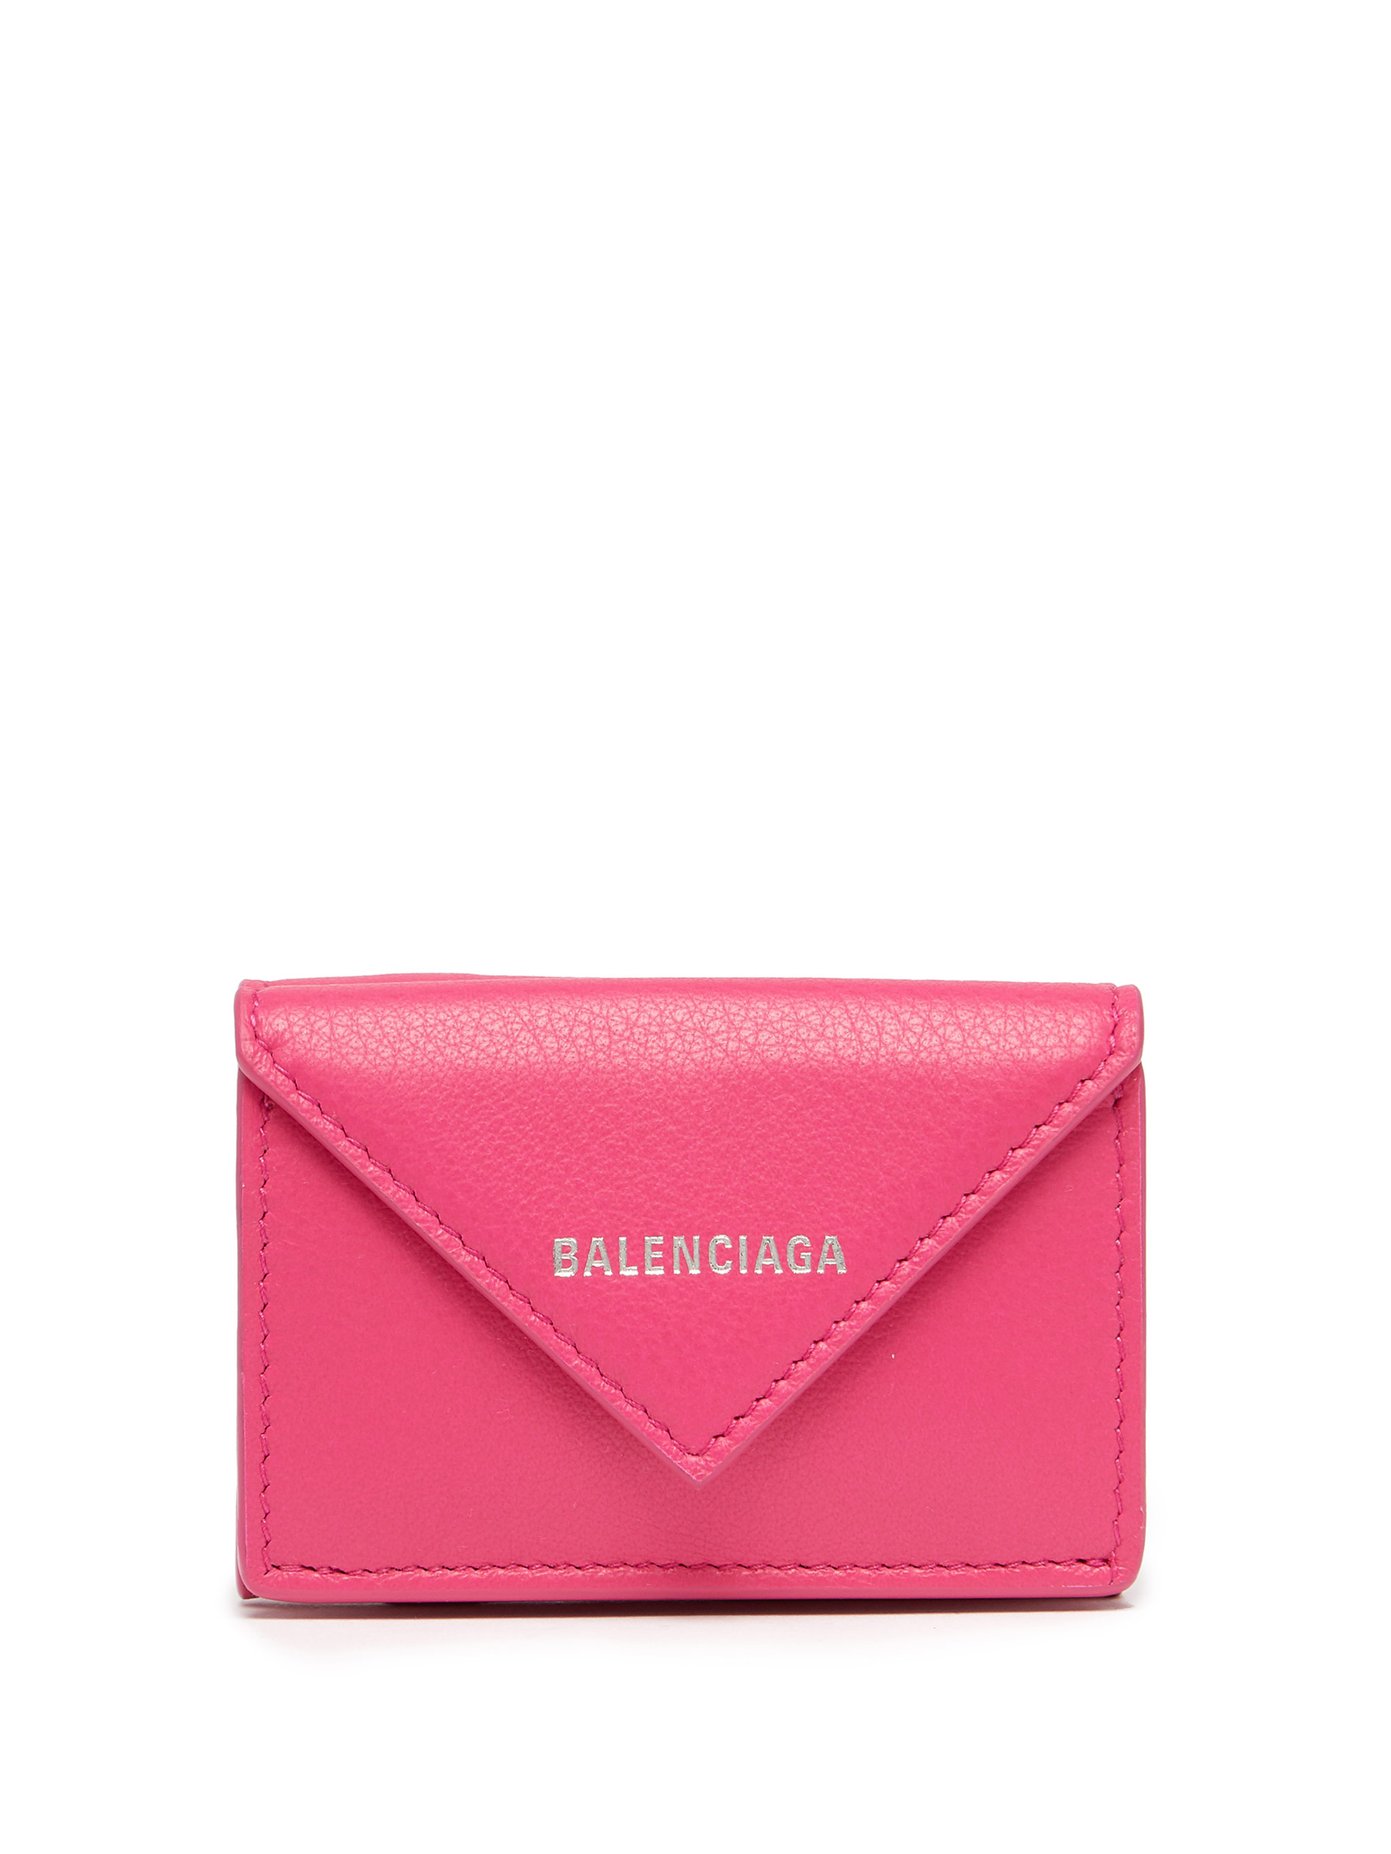 balenciaga mini wallet pink